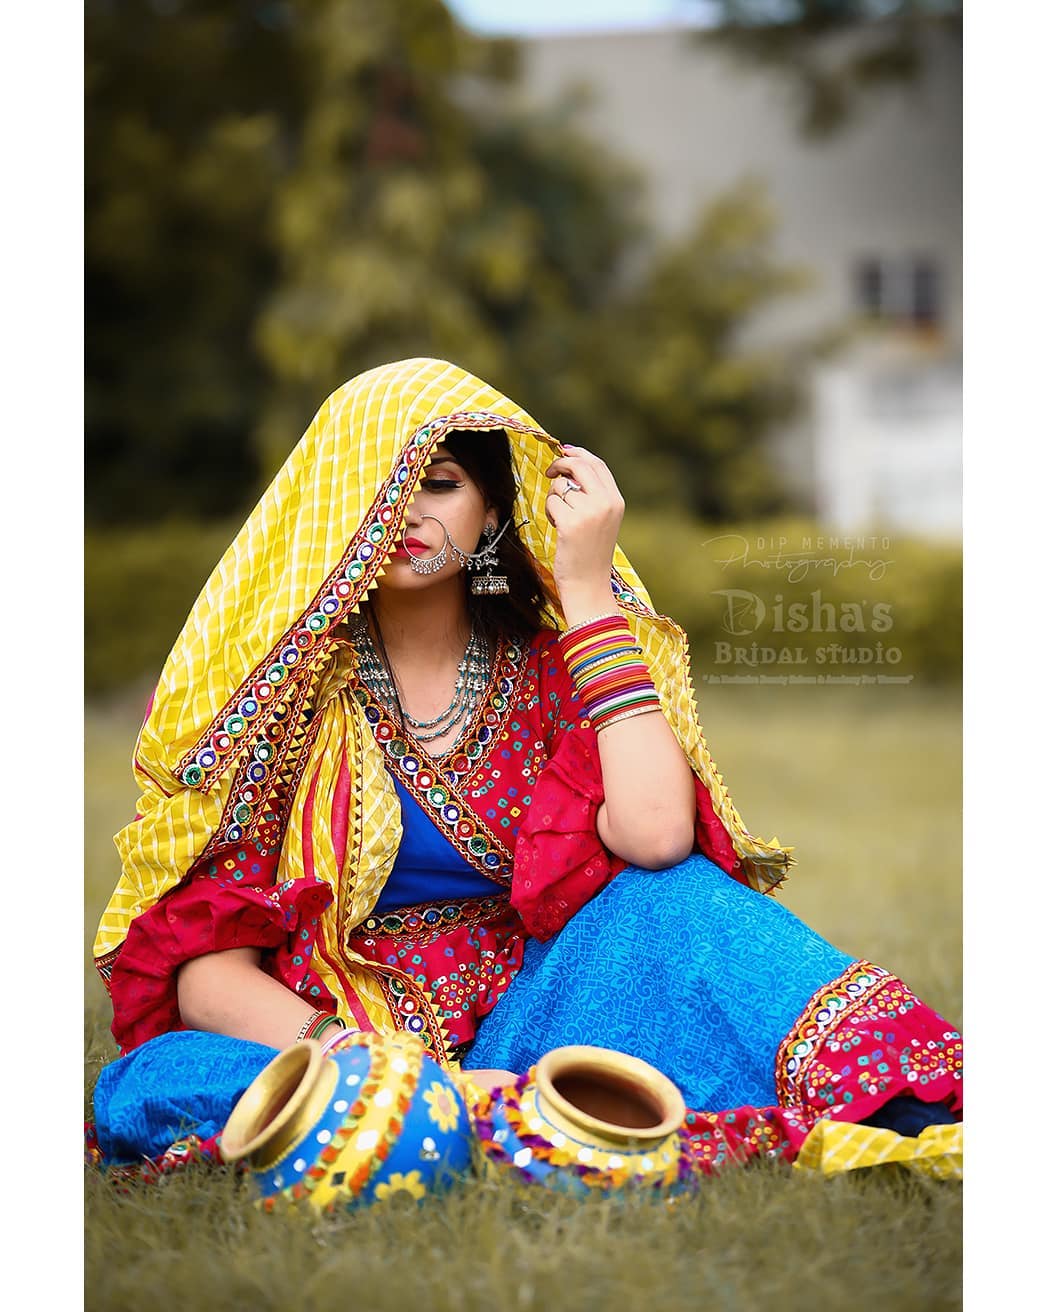 Glamour is a shooting star, it catches your eye, but fades away, beauty is the sun always brilliant day after day. 
#navratri #navratri2019 #navratri2k19
.
MUA: @dishapanchal246 
Shoot: @dip_memento_photography 
@meandmyphotography11
 InFrame: @imug_pandey 
Jewellery: @nancyhandicraft9
Costume by: @rashmithummar 
#photoshoot #ethnic #traditionalart #ahmedabad #gujarati  #rajputilook #makeup #navratrichaniyacholi #chaniyacholi #indianfashionblogger  #fashionblogger #makeuptutorial #weddingdress  #rajput #bollywood #bollywoodhotness #bollywoodactresses #indian #pic #picoftheday #photooftheday  #festivalofnations #festival #9924227745 #dipmementophotography #dip_memento_photography